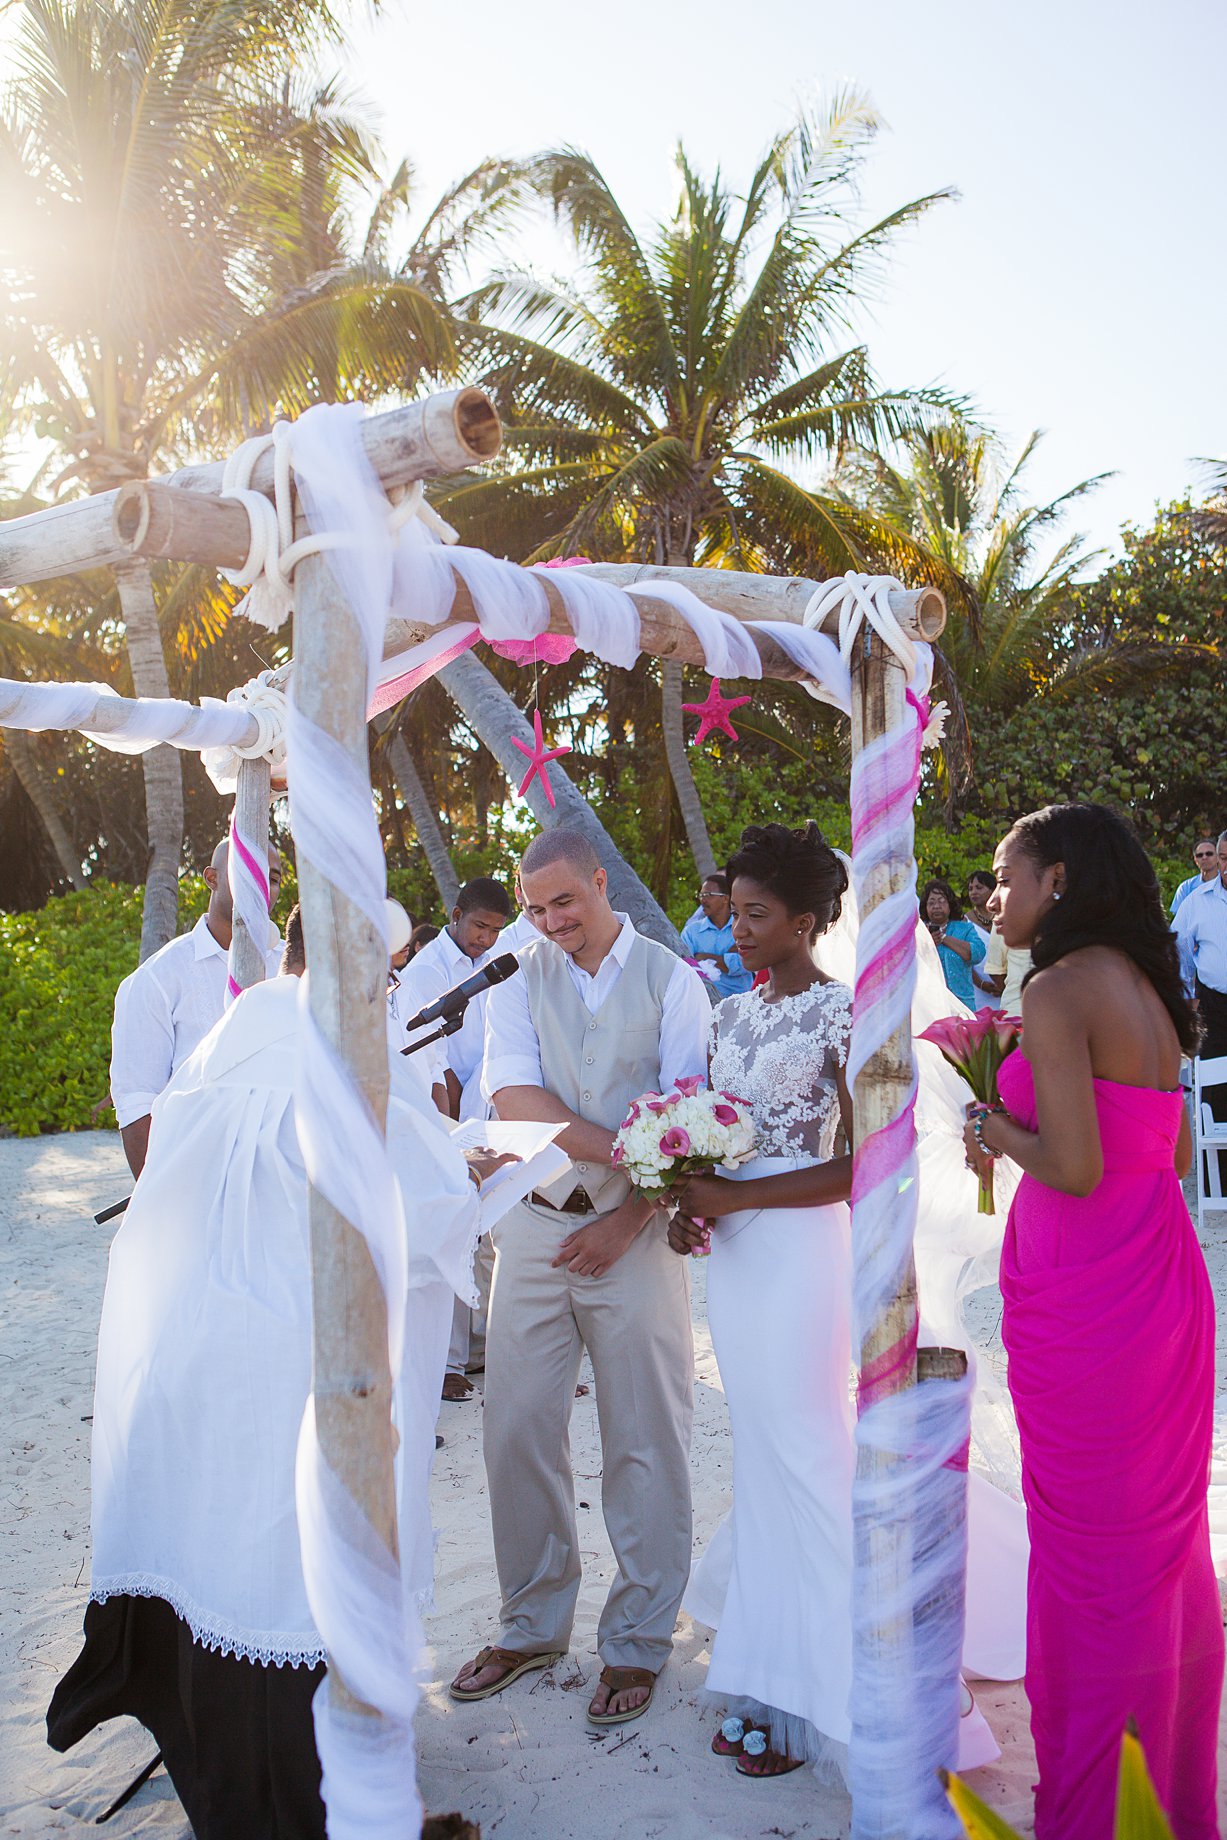 grand cayman wedding photographers_0151